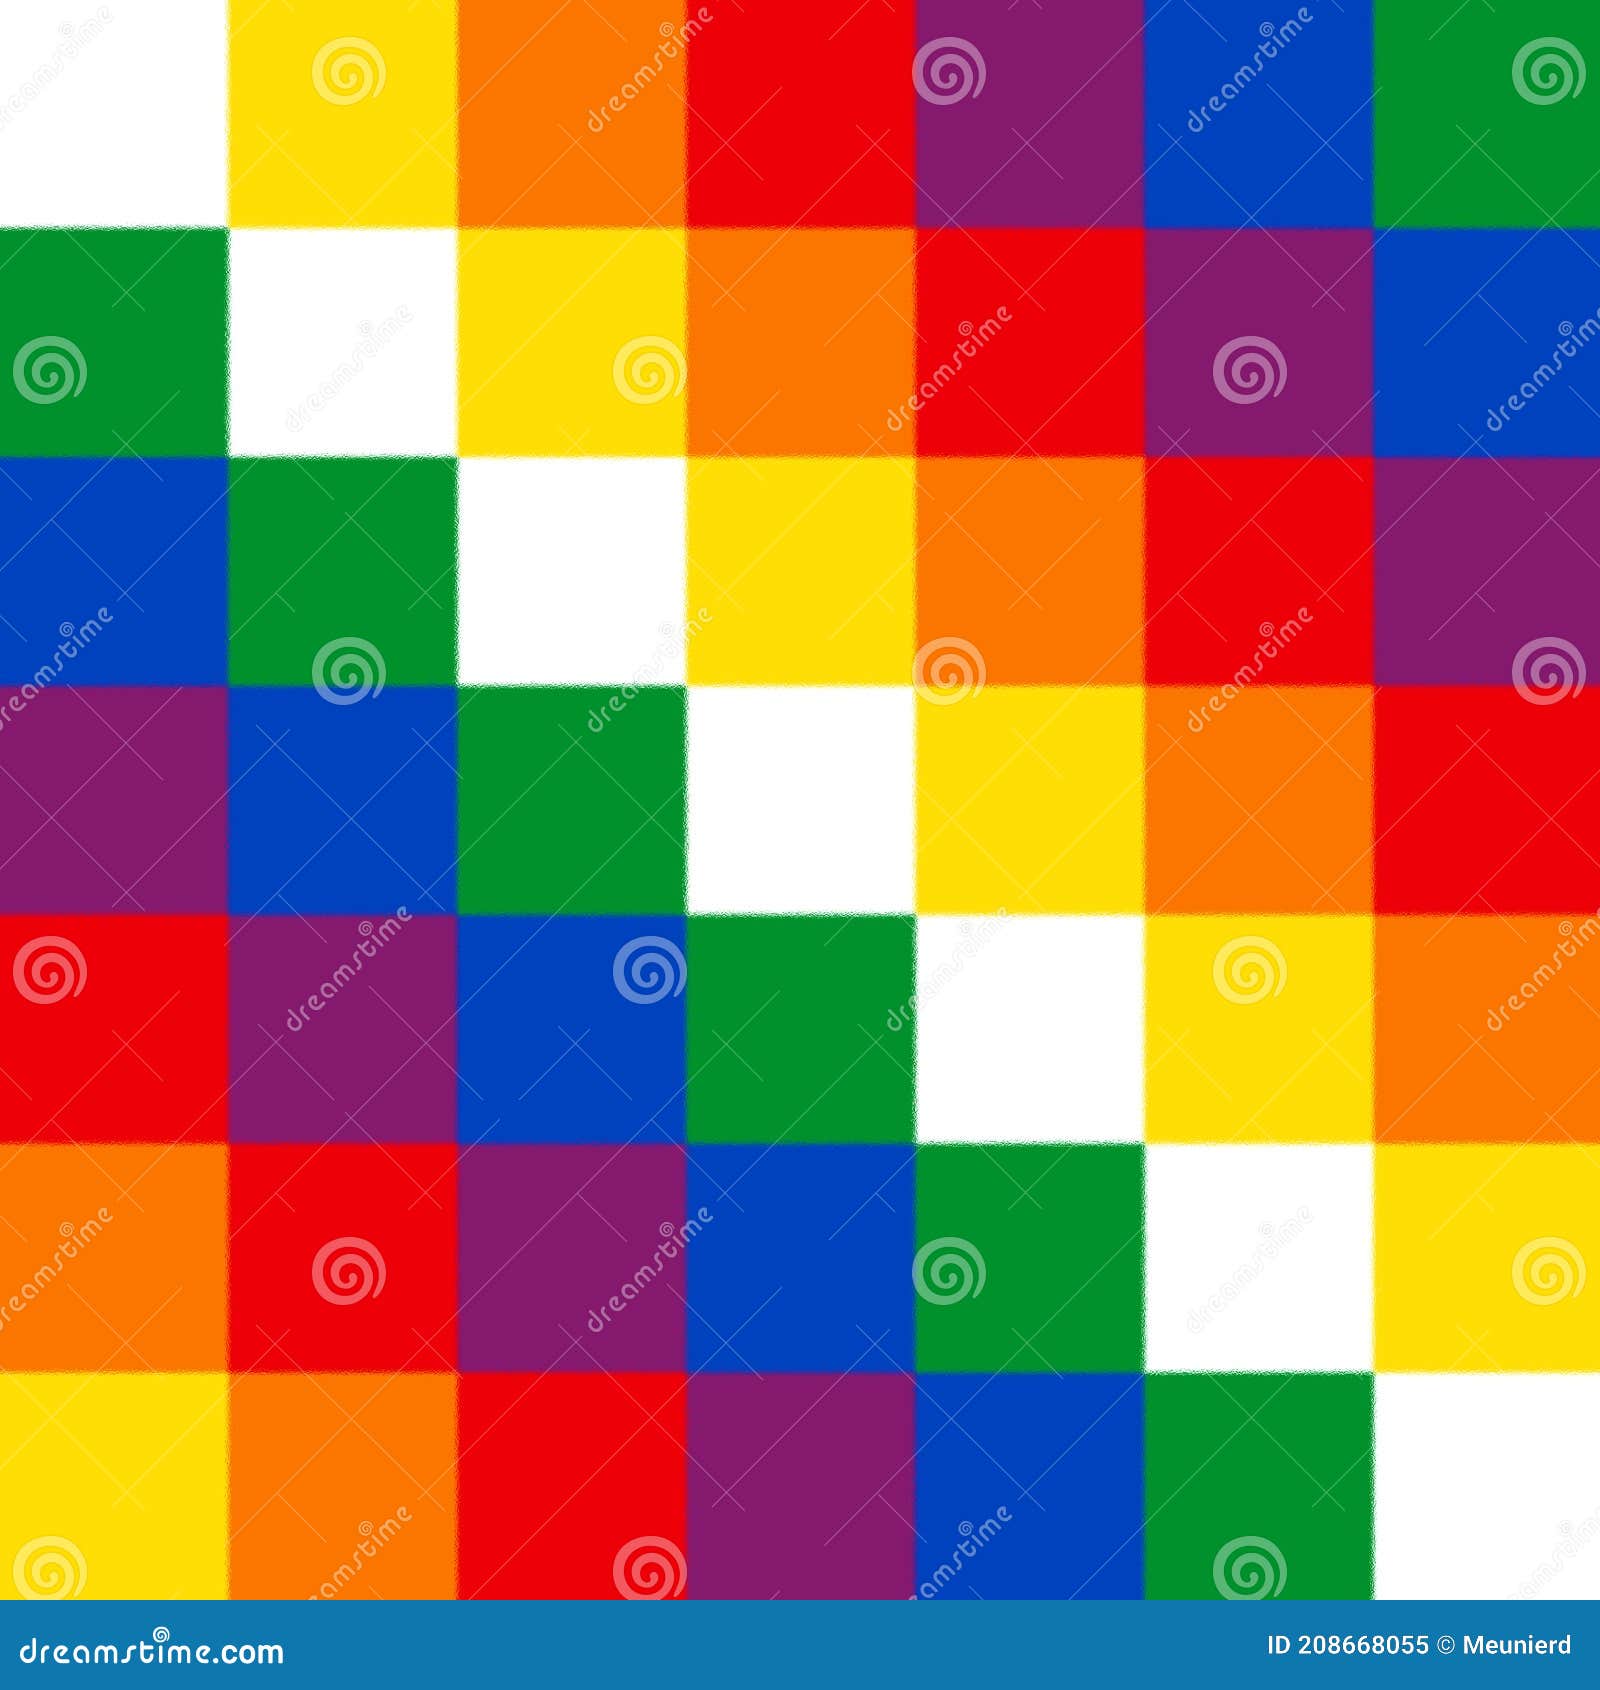 glossy glass flag of wiphala